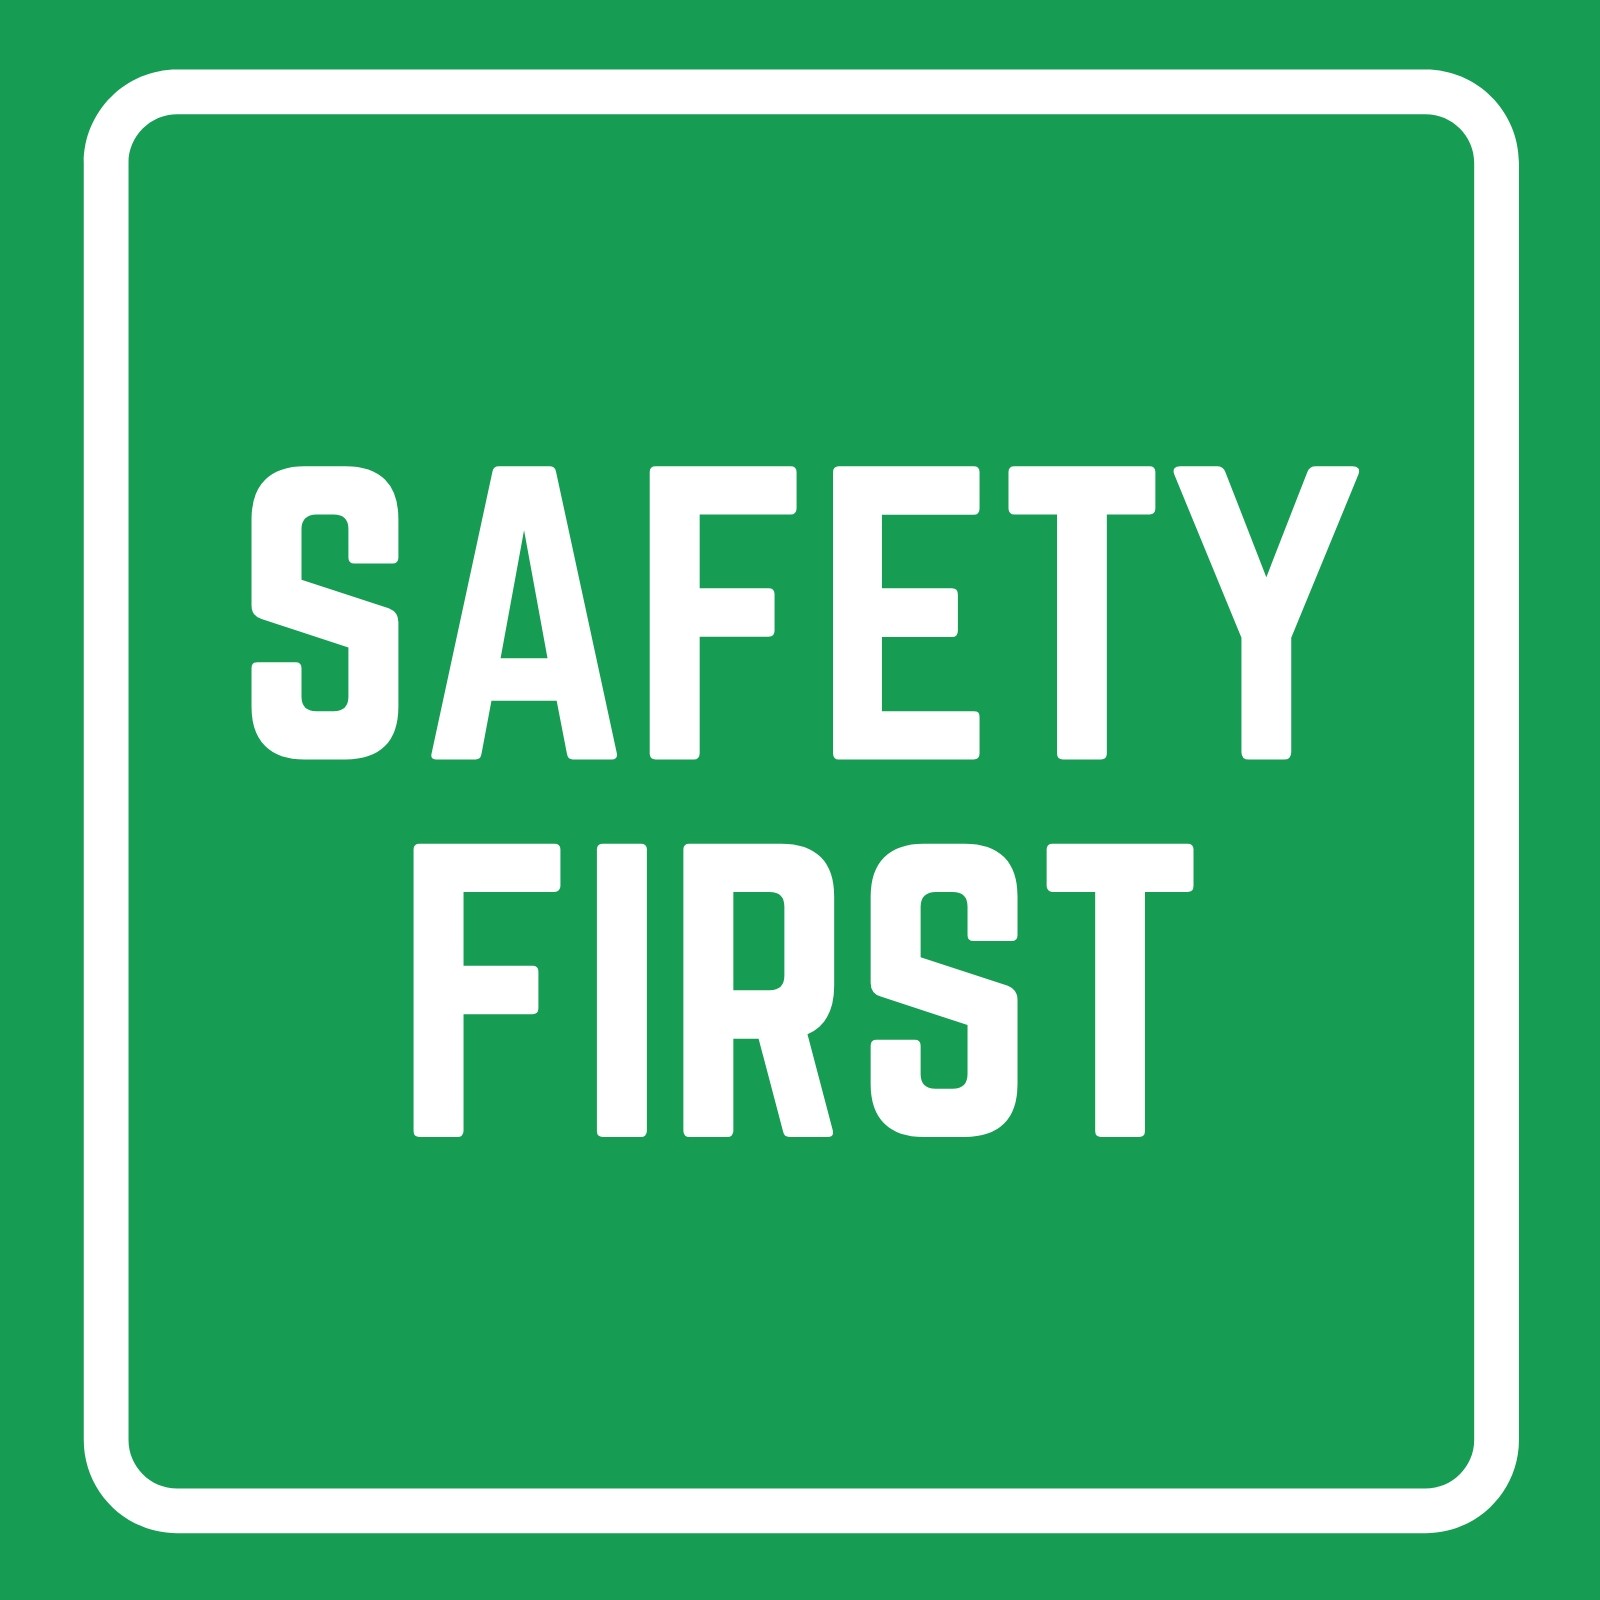 Health and Safety Green Safety Sticker Safety First Text Sticker 